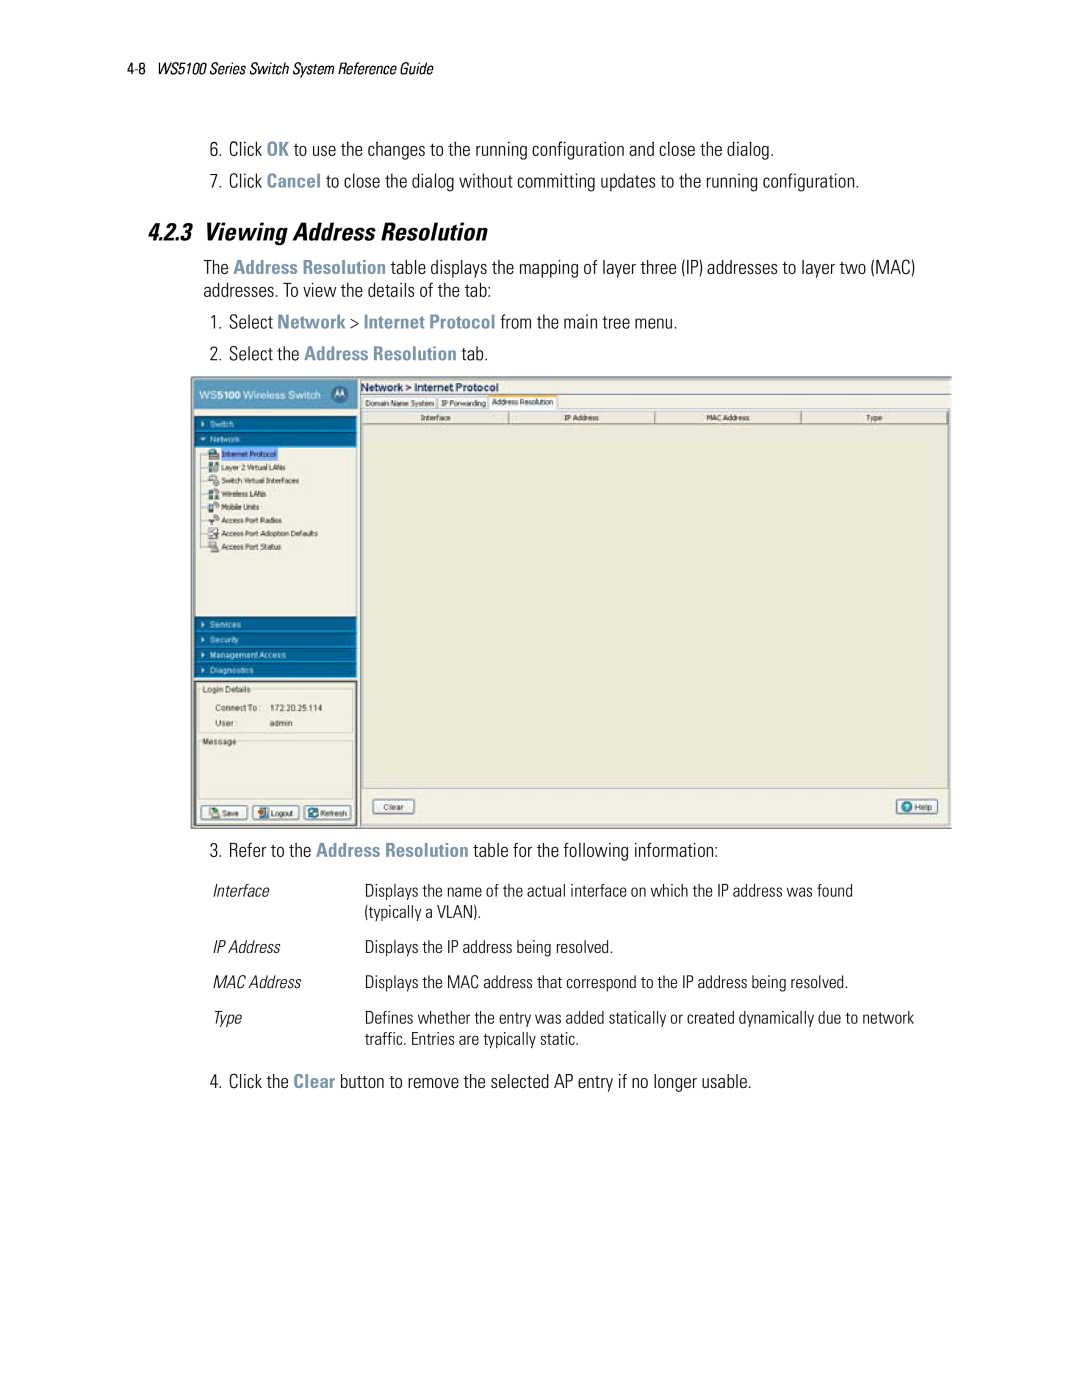 Motorola WS5100 manual 4.2.3Viewing Address Resolution, Select the Address Resolution tab 